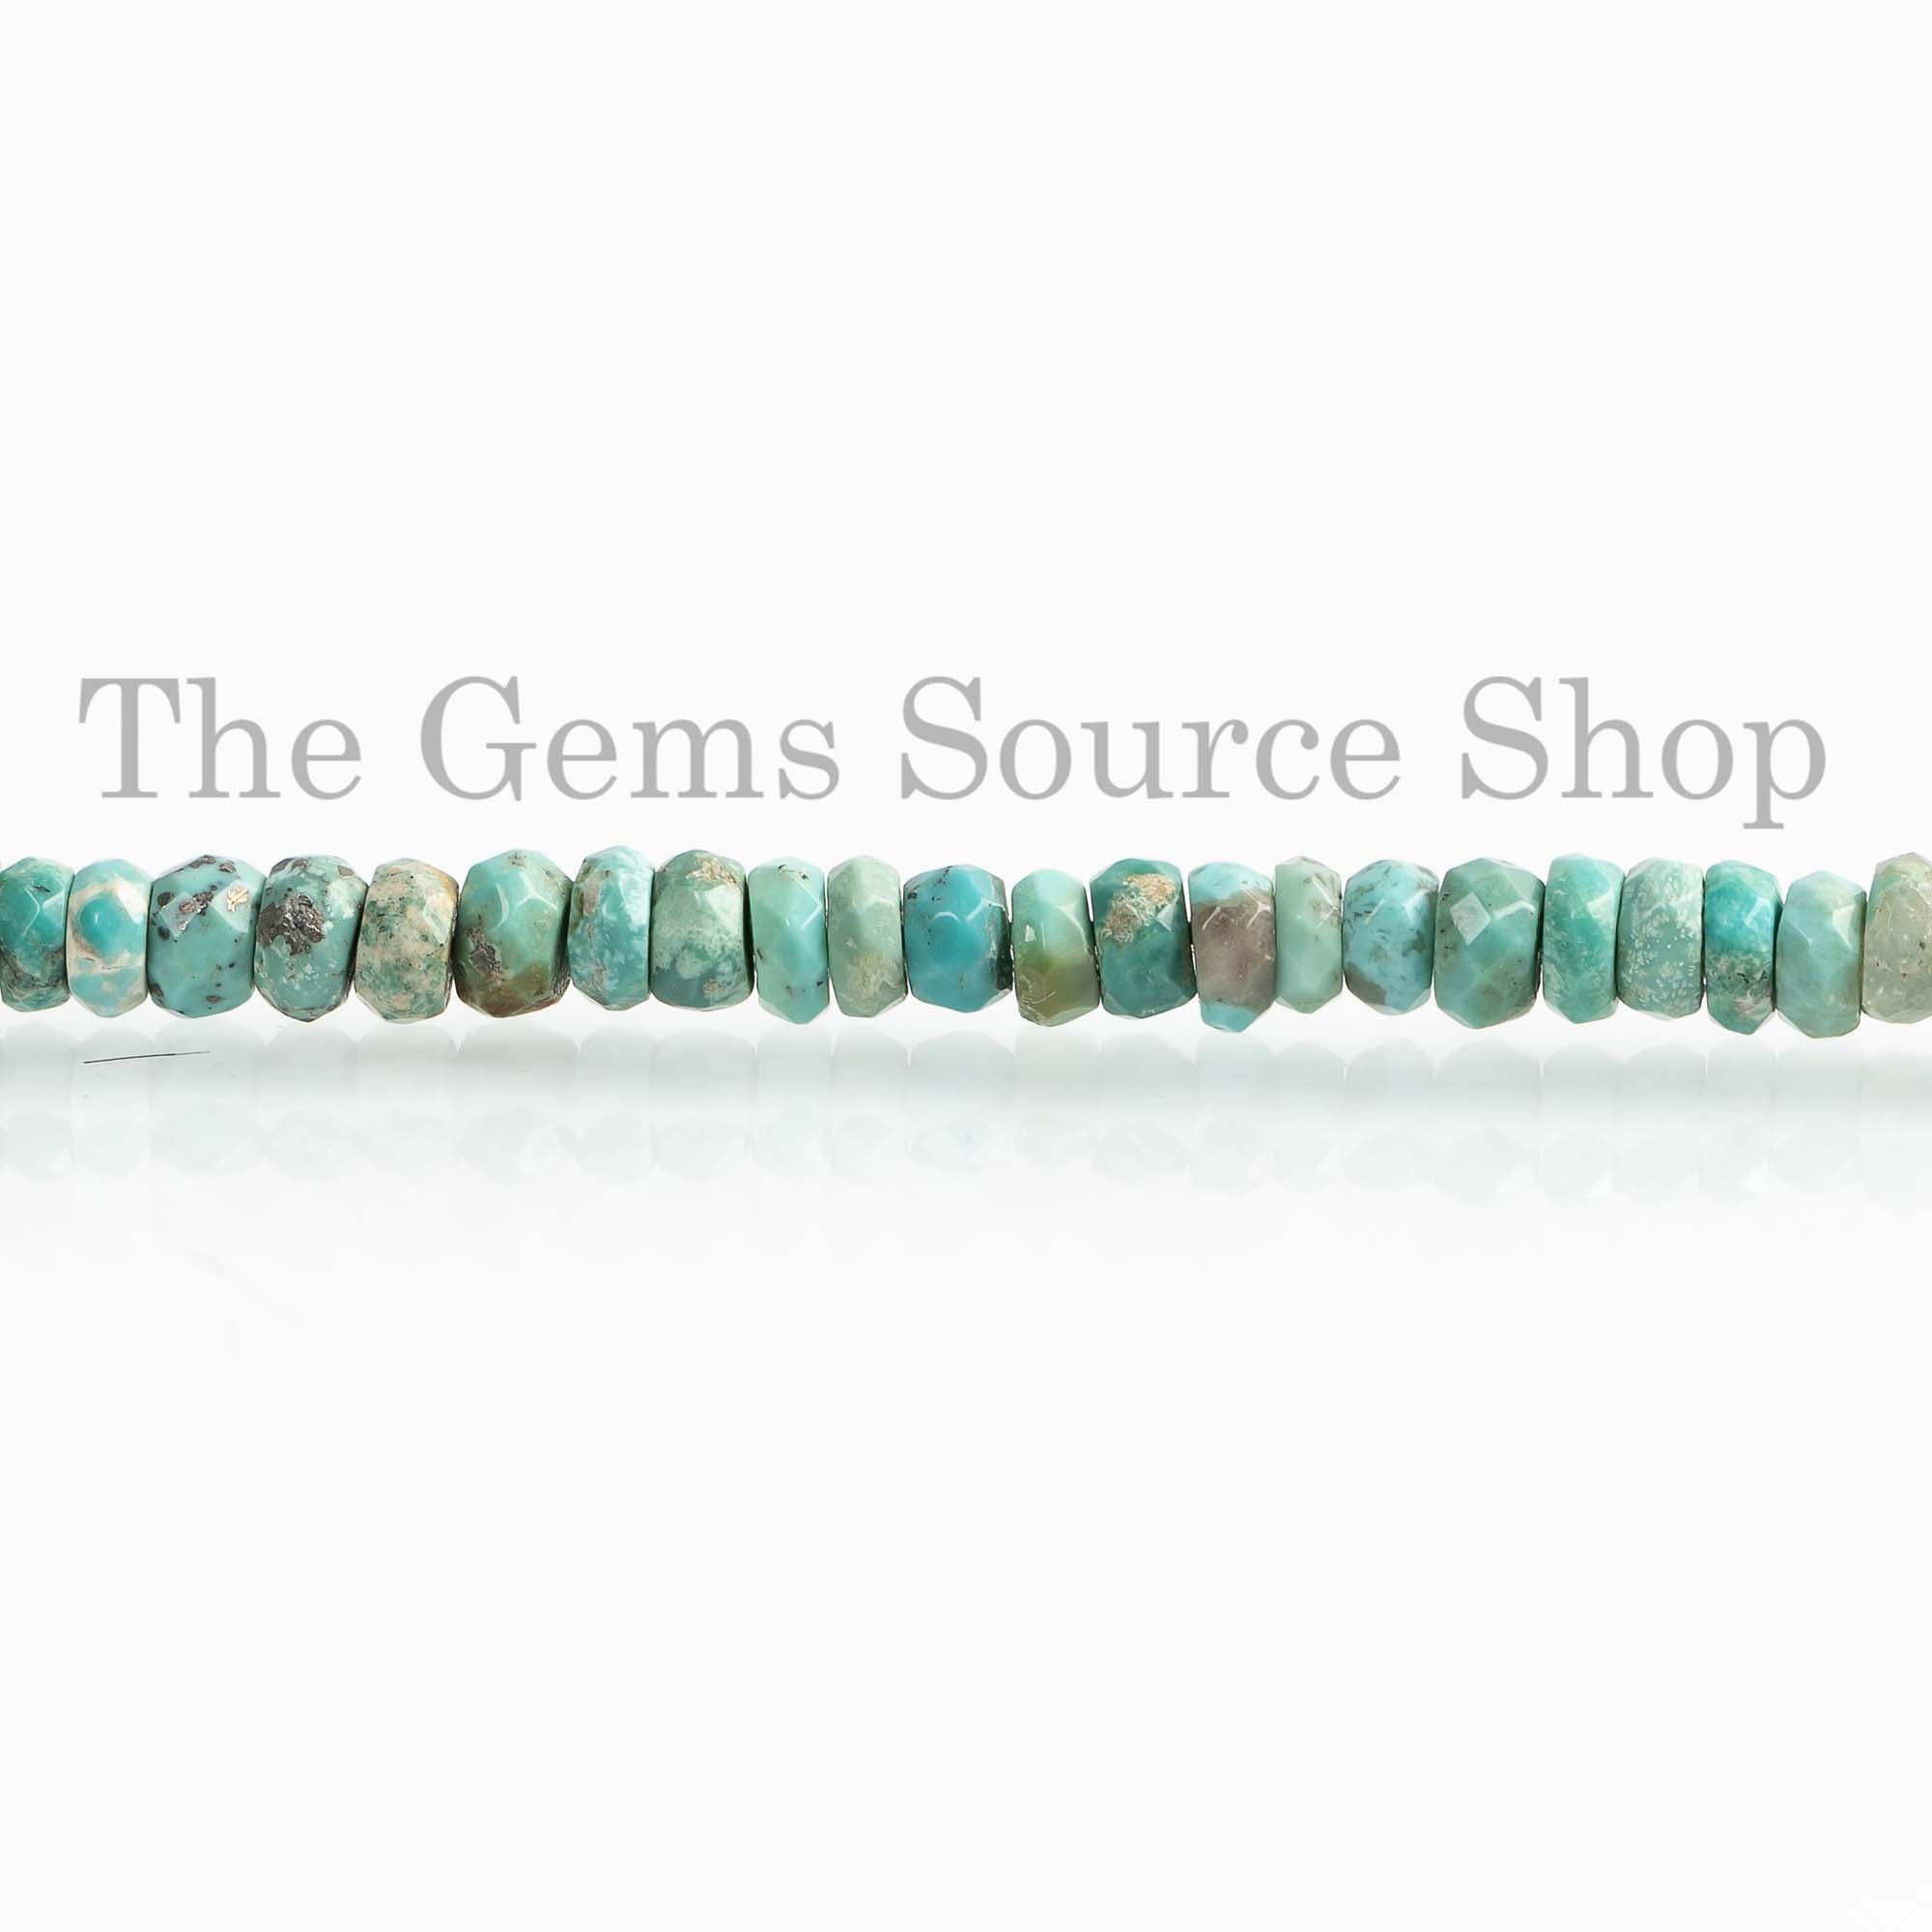 3.25-4.5mm Natural Turquoise Rondelle Beads, Arizona Turquoise Beads, Faceted Rondelle Beads, Turquoise Rondelle, Jewelry Making